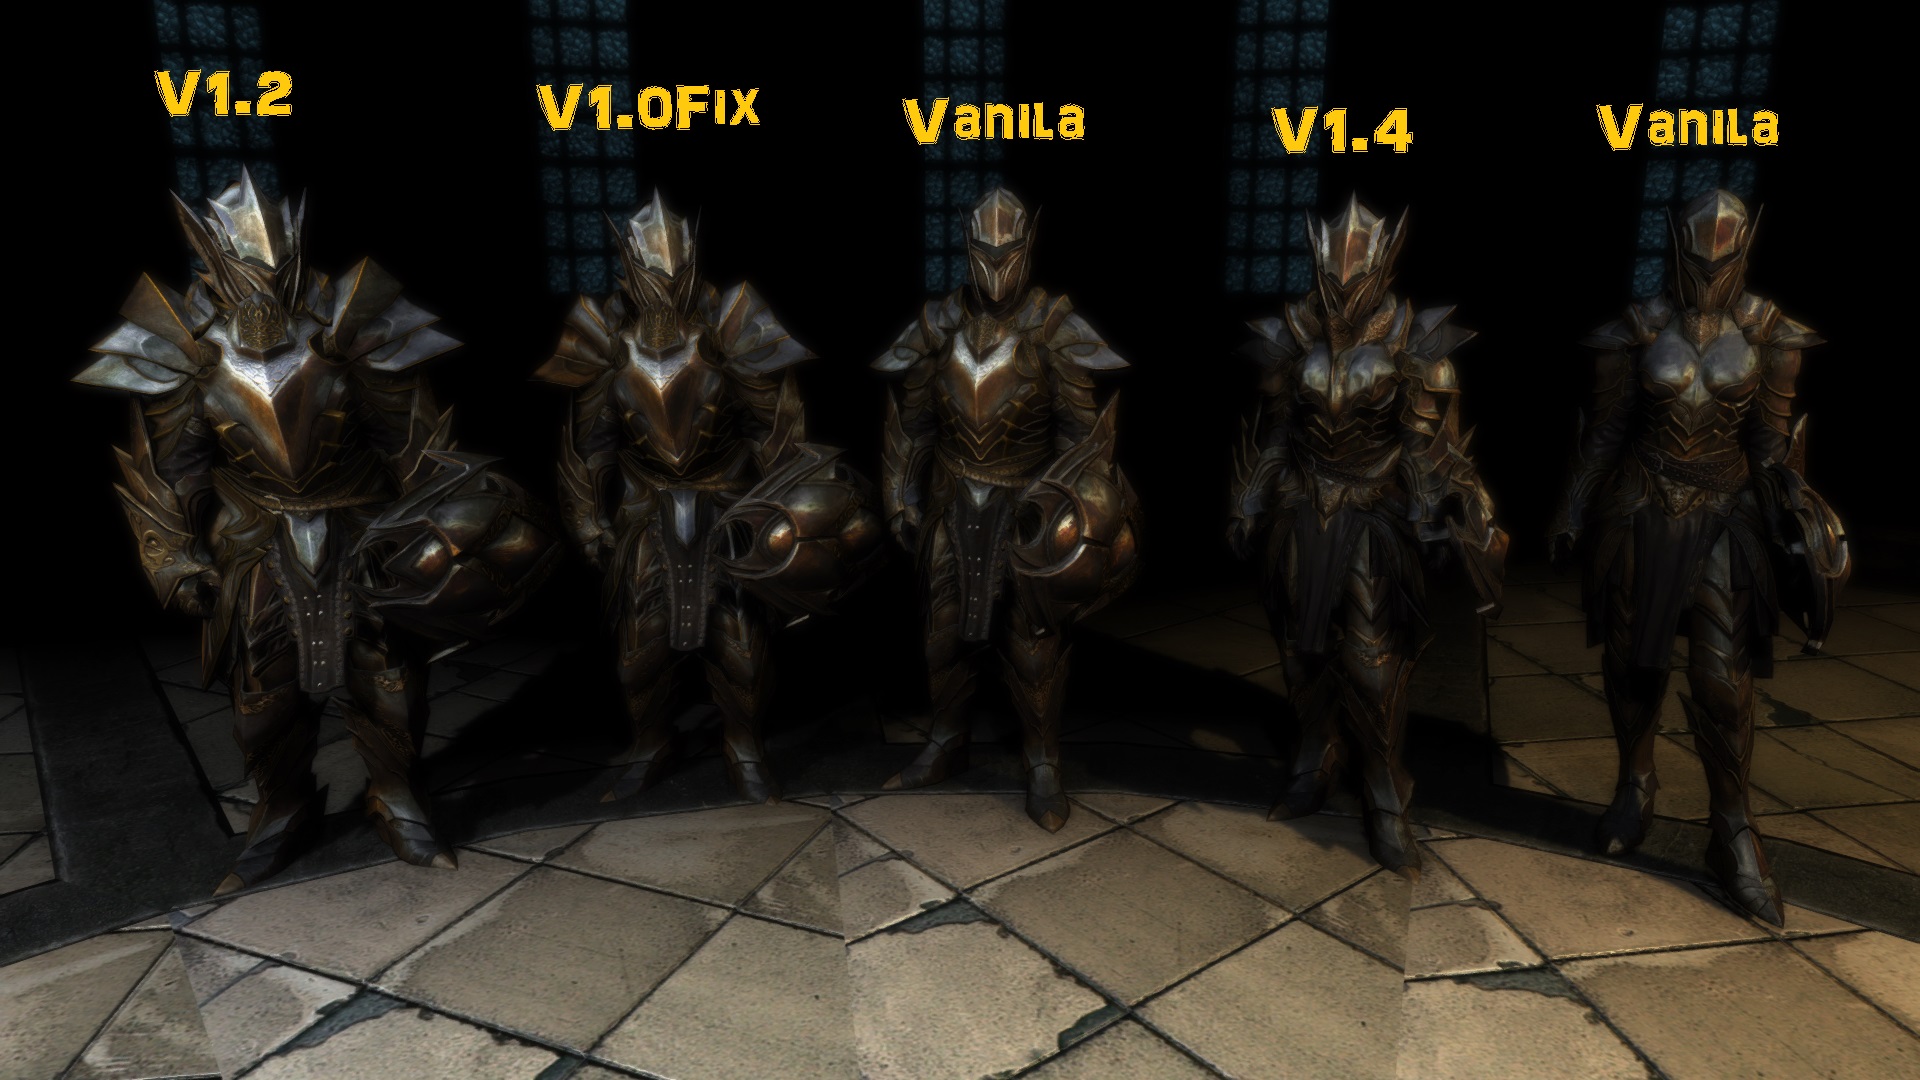 skyrim old kingdom armor overhaul nexus